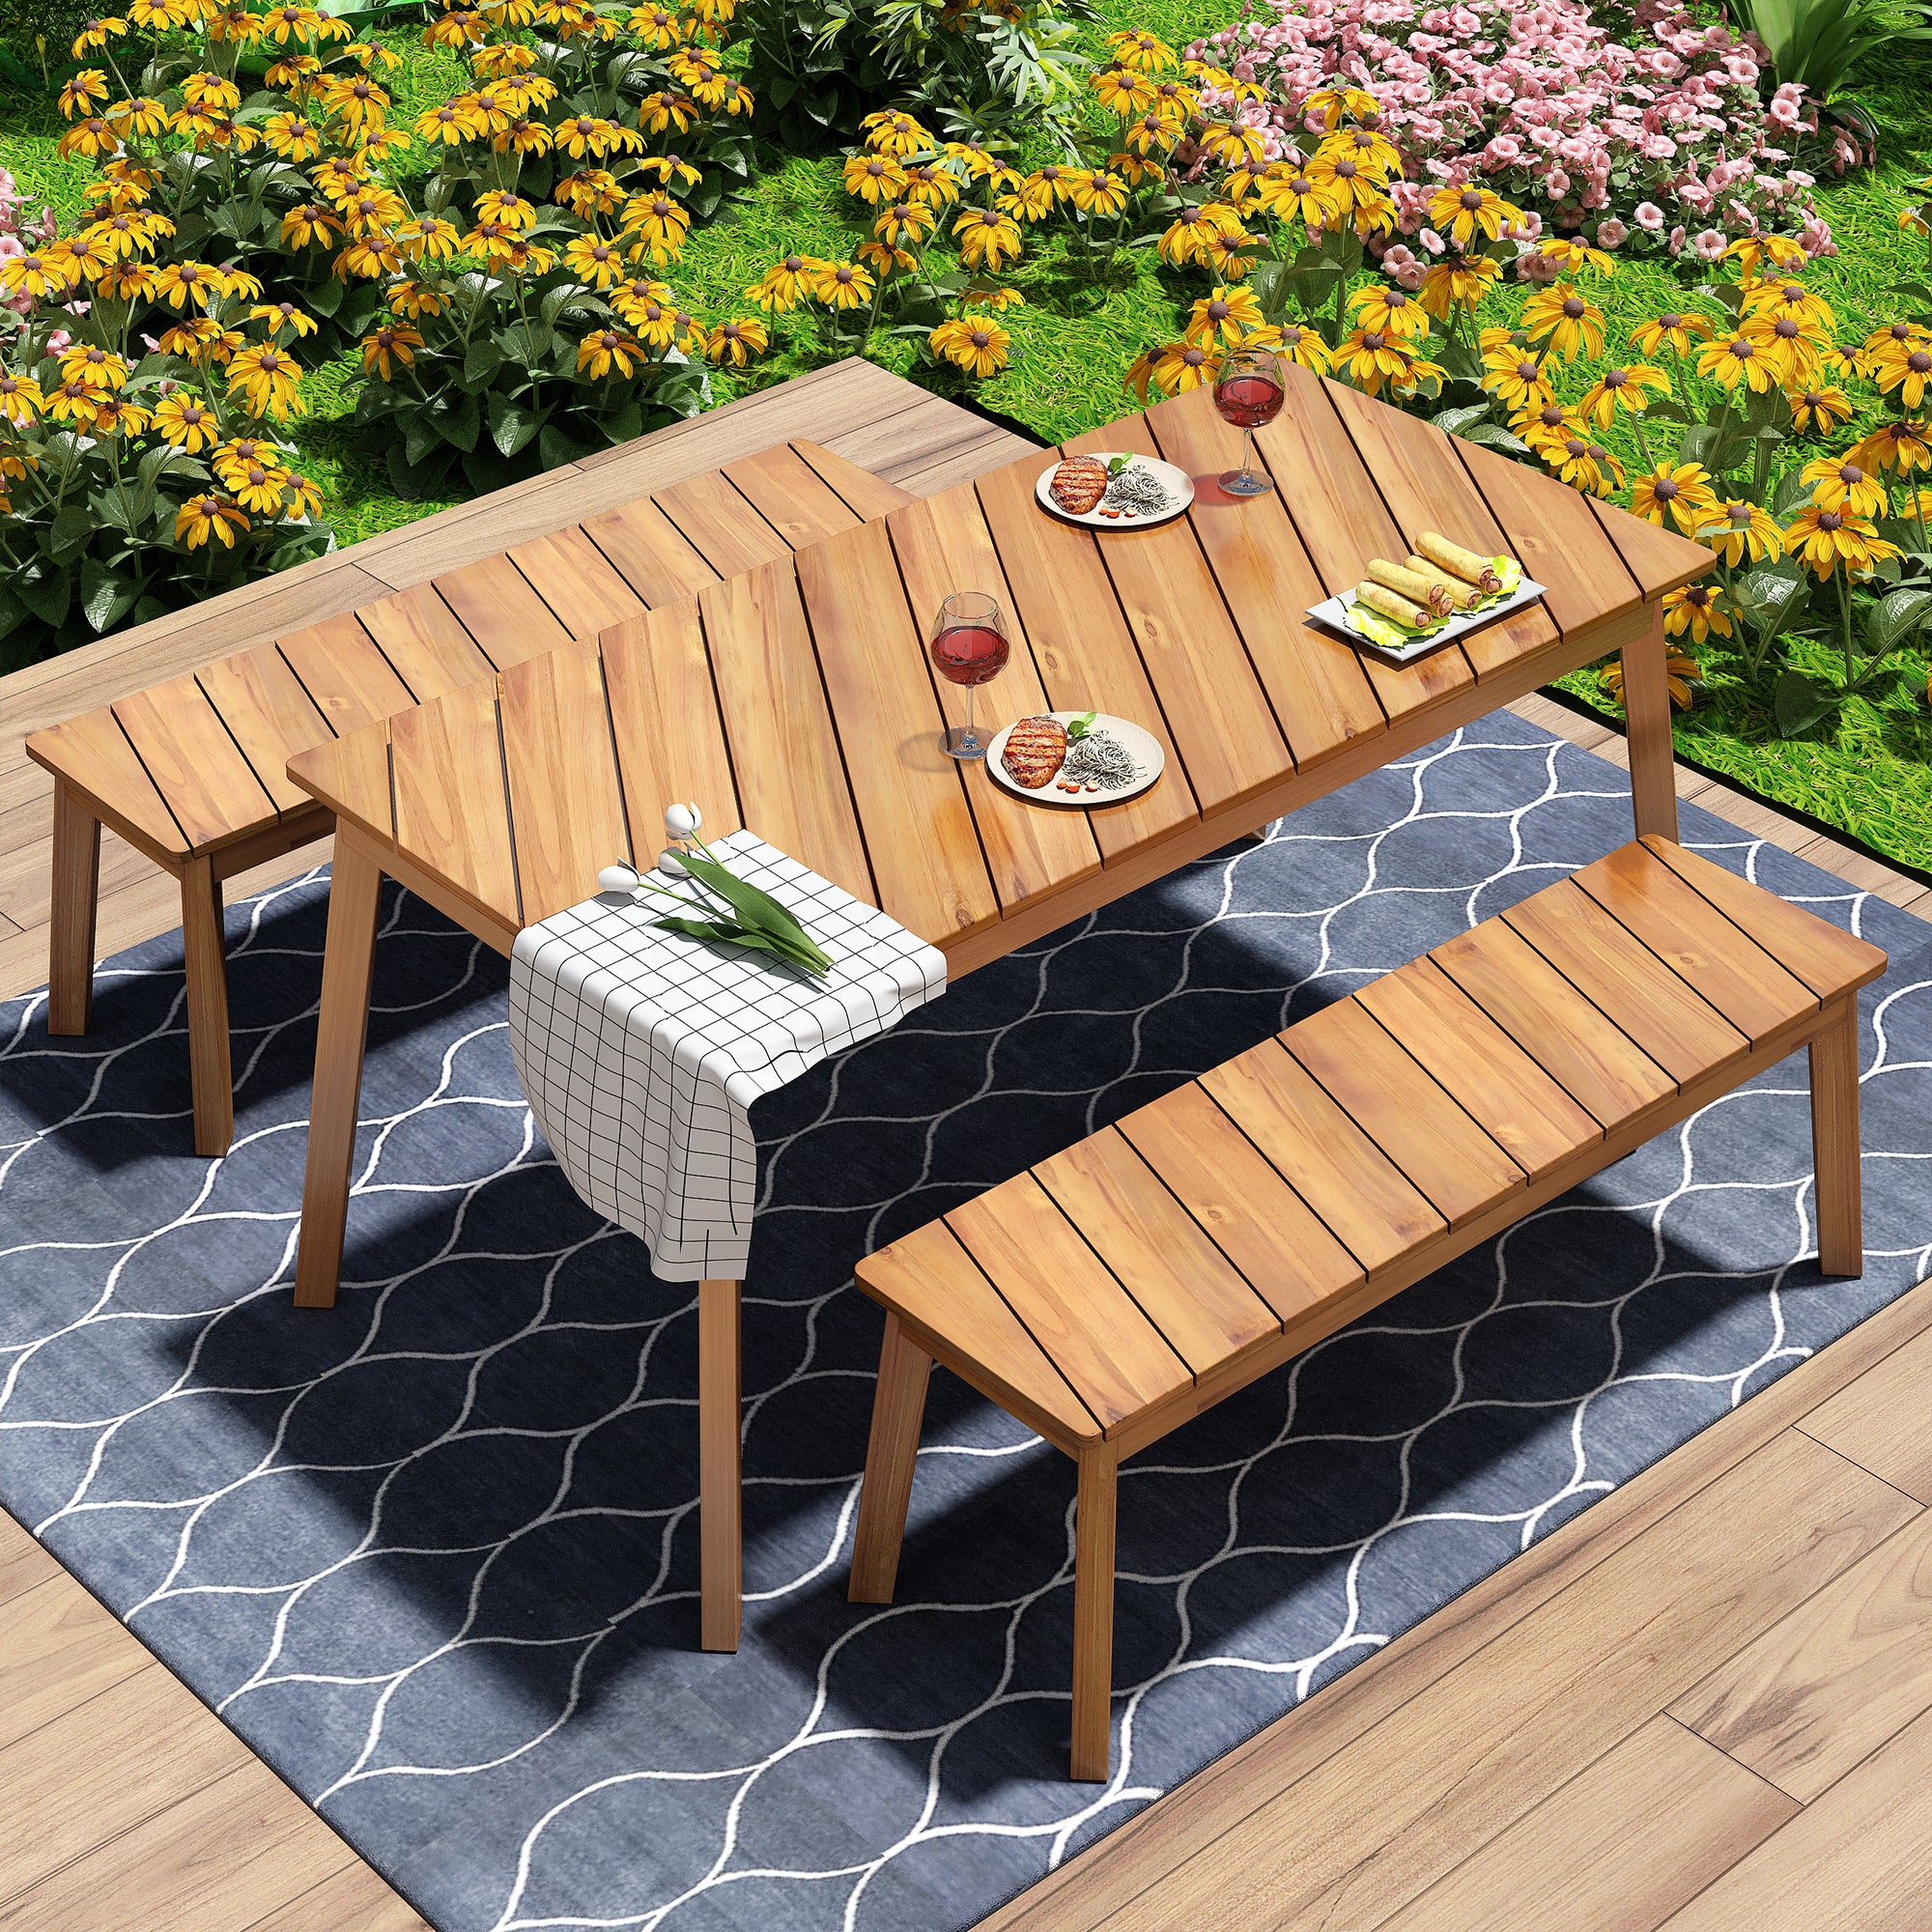 GO 3 Pieces Acacia Wood Table & 2 Benches Indoor/Outdoor Patio/Porch Furniture Set, Natural